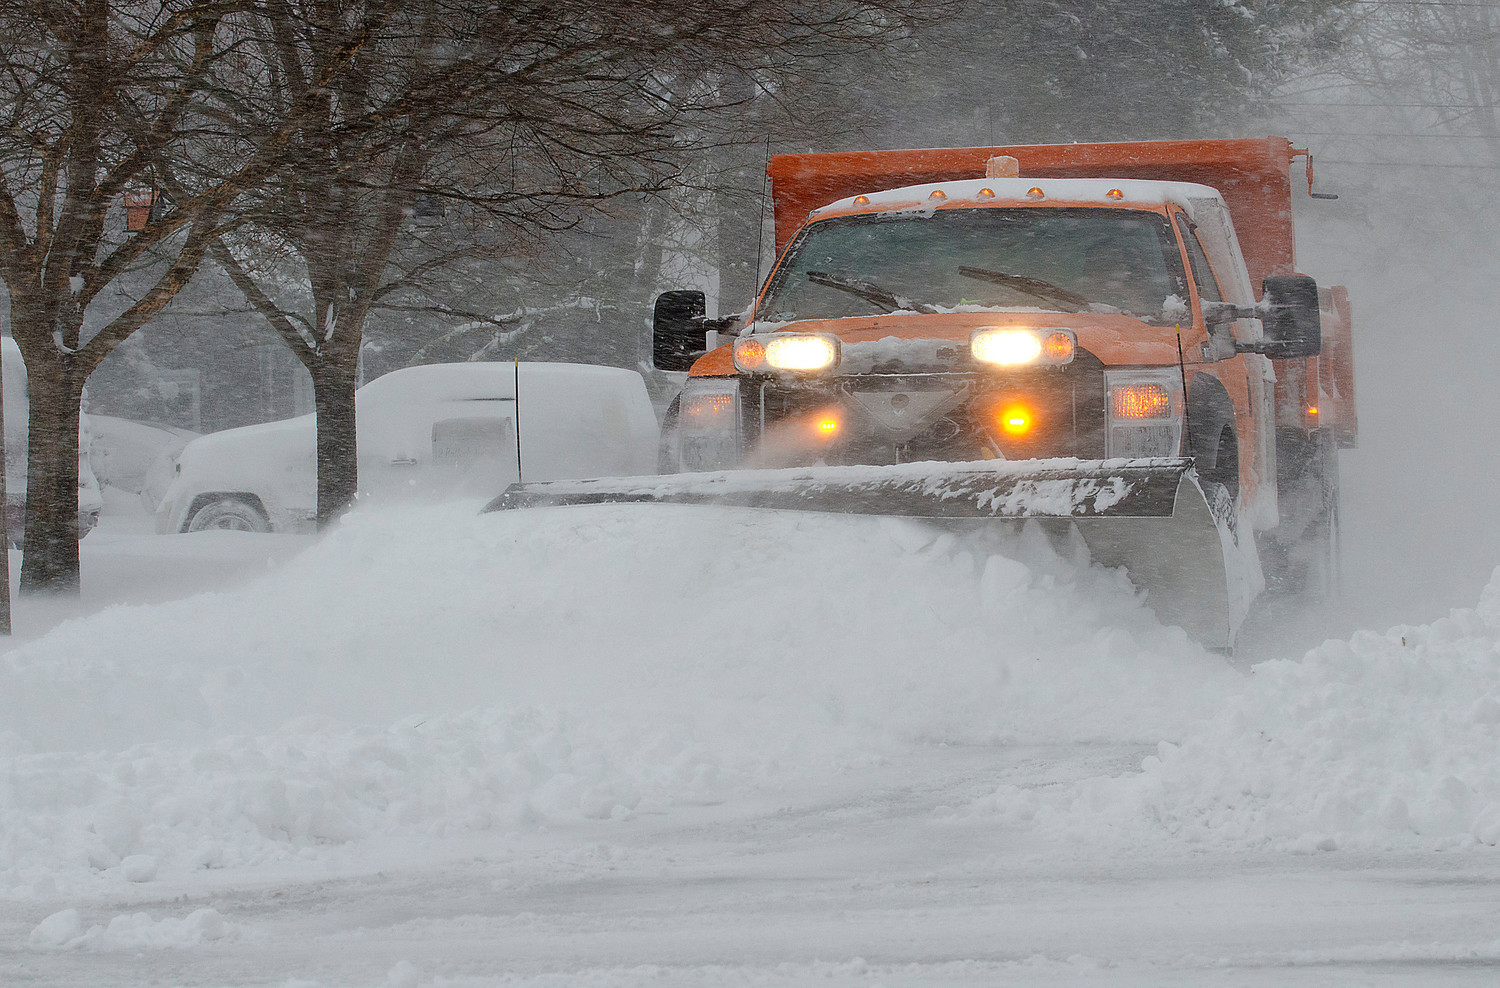 30 year Barrington DPW employee Mike Sousa plows Bullock Avenue during the blizzard on Thursday.